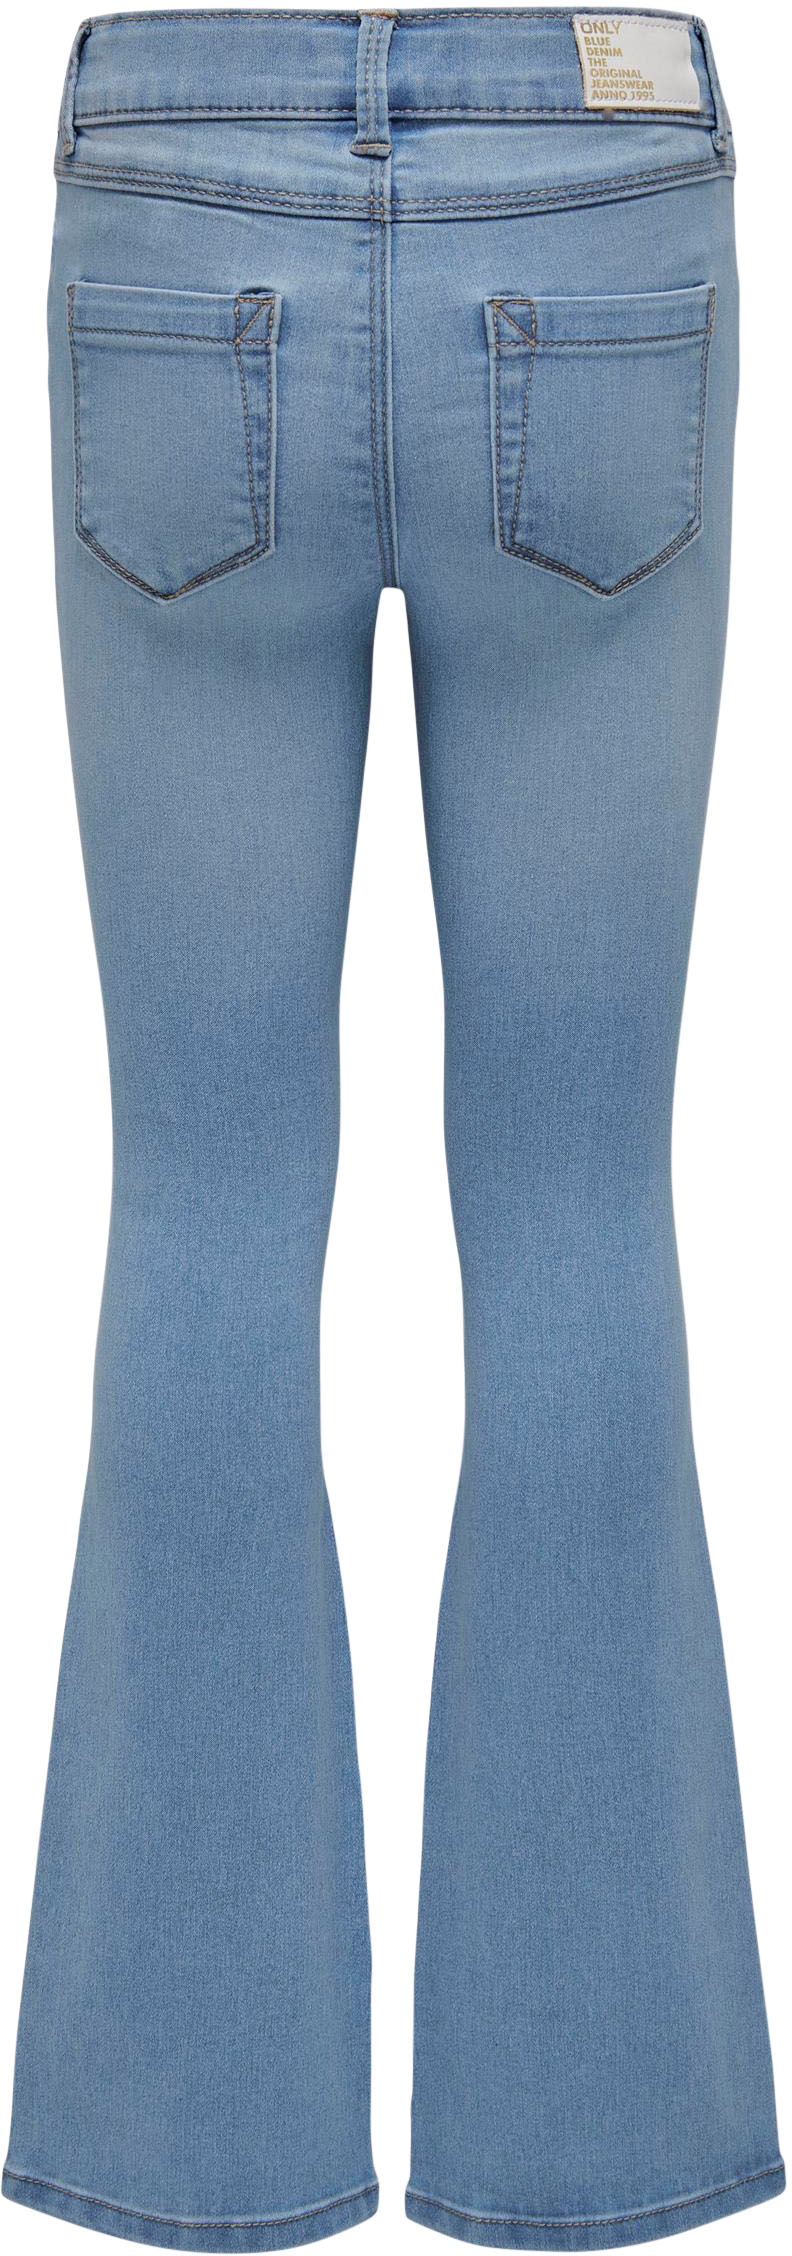 Trendige Bootcut-Jeans FLARED ohne PIM020 ONLY LIFE Mindestbestellwert »KOGROYAL NOOS« KIDS shoppen REG